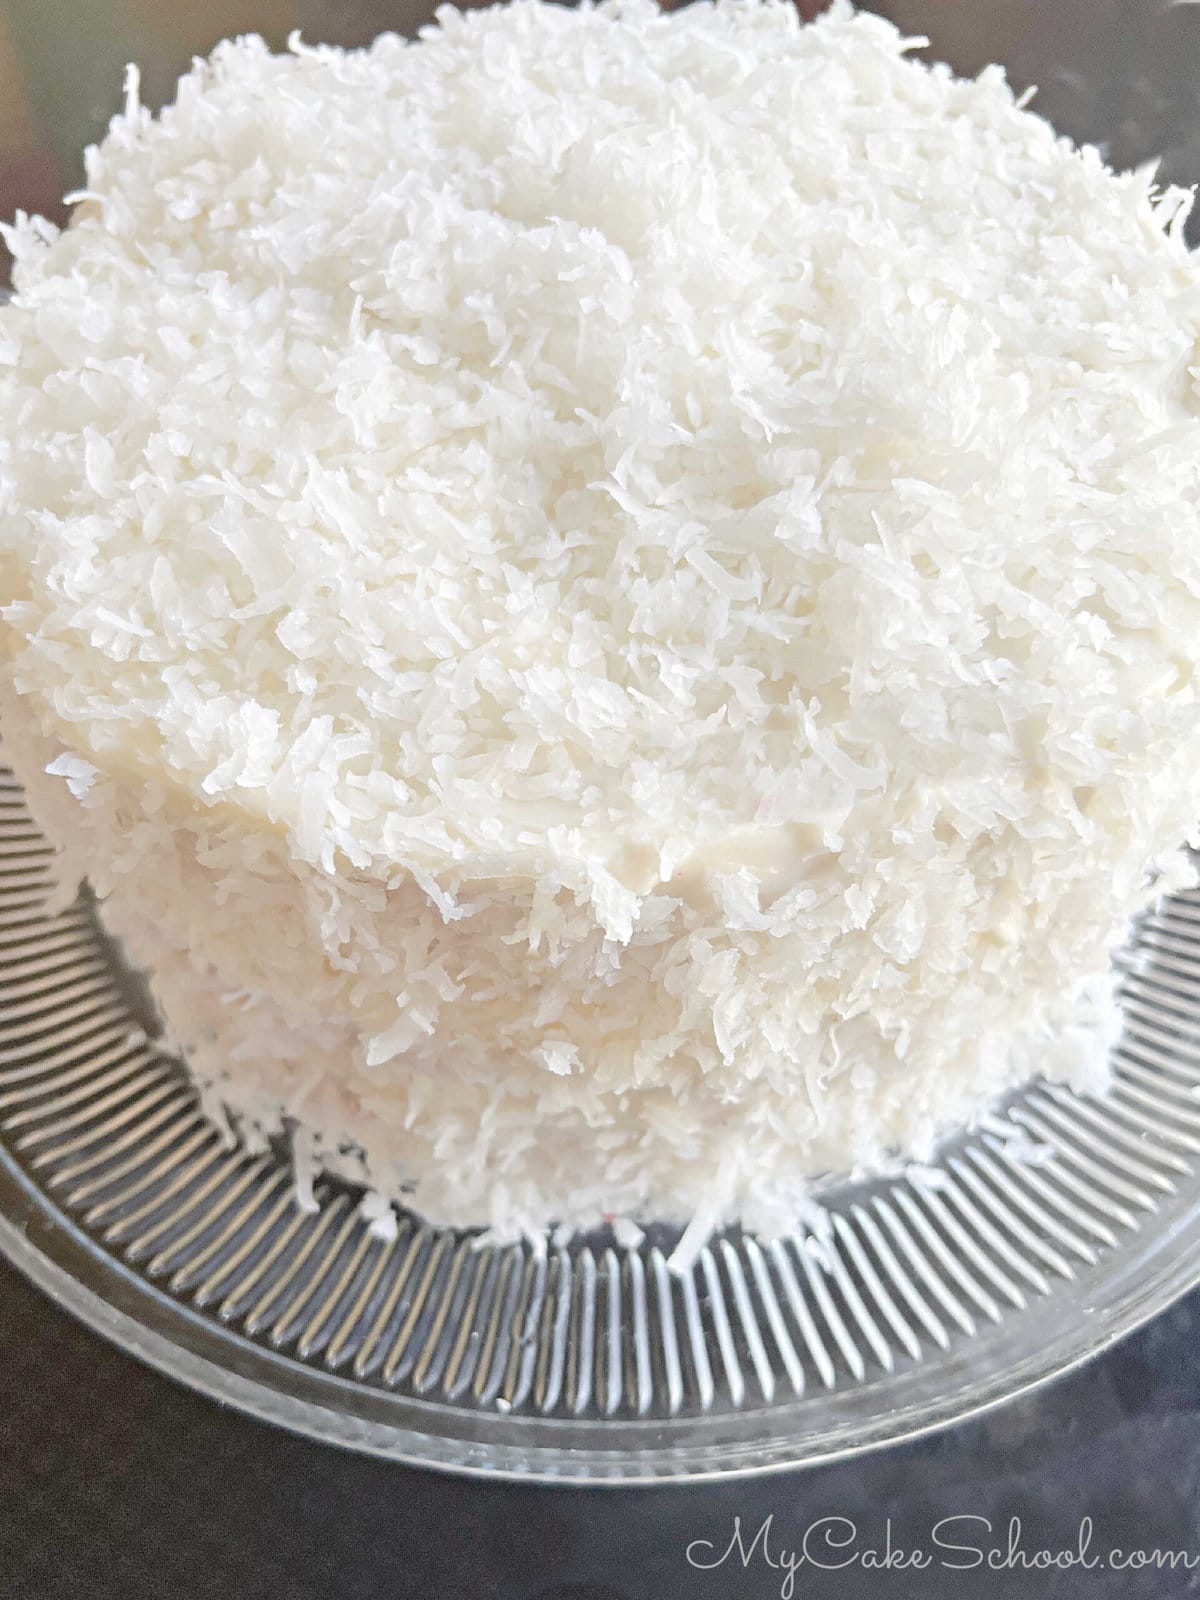 Red velvet coconut cake on a cake pedestal (before slicing). Cake is covered in shredded coconut.